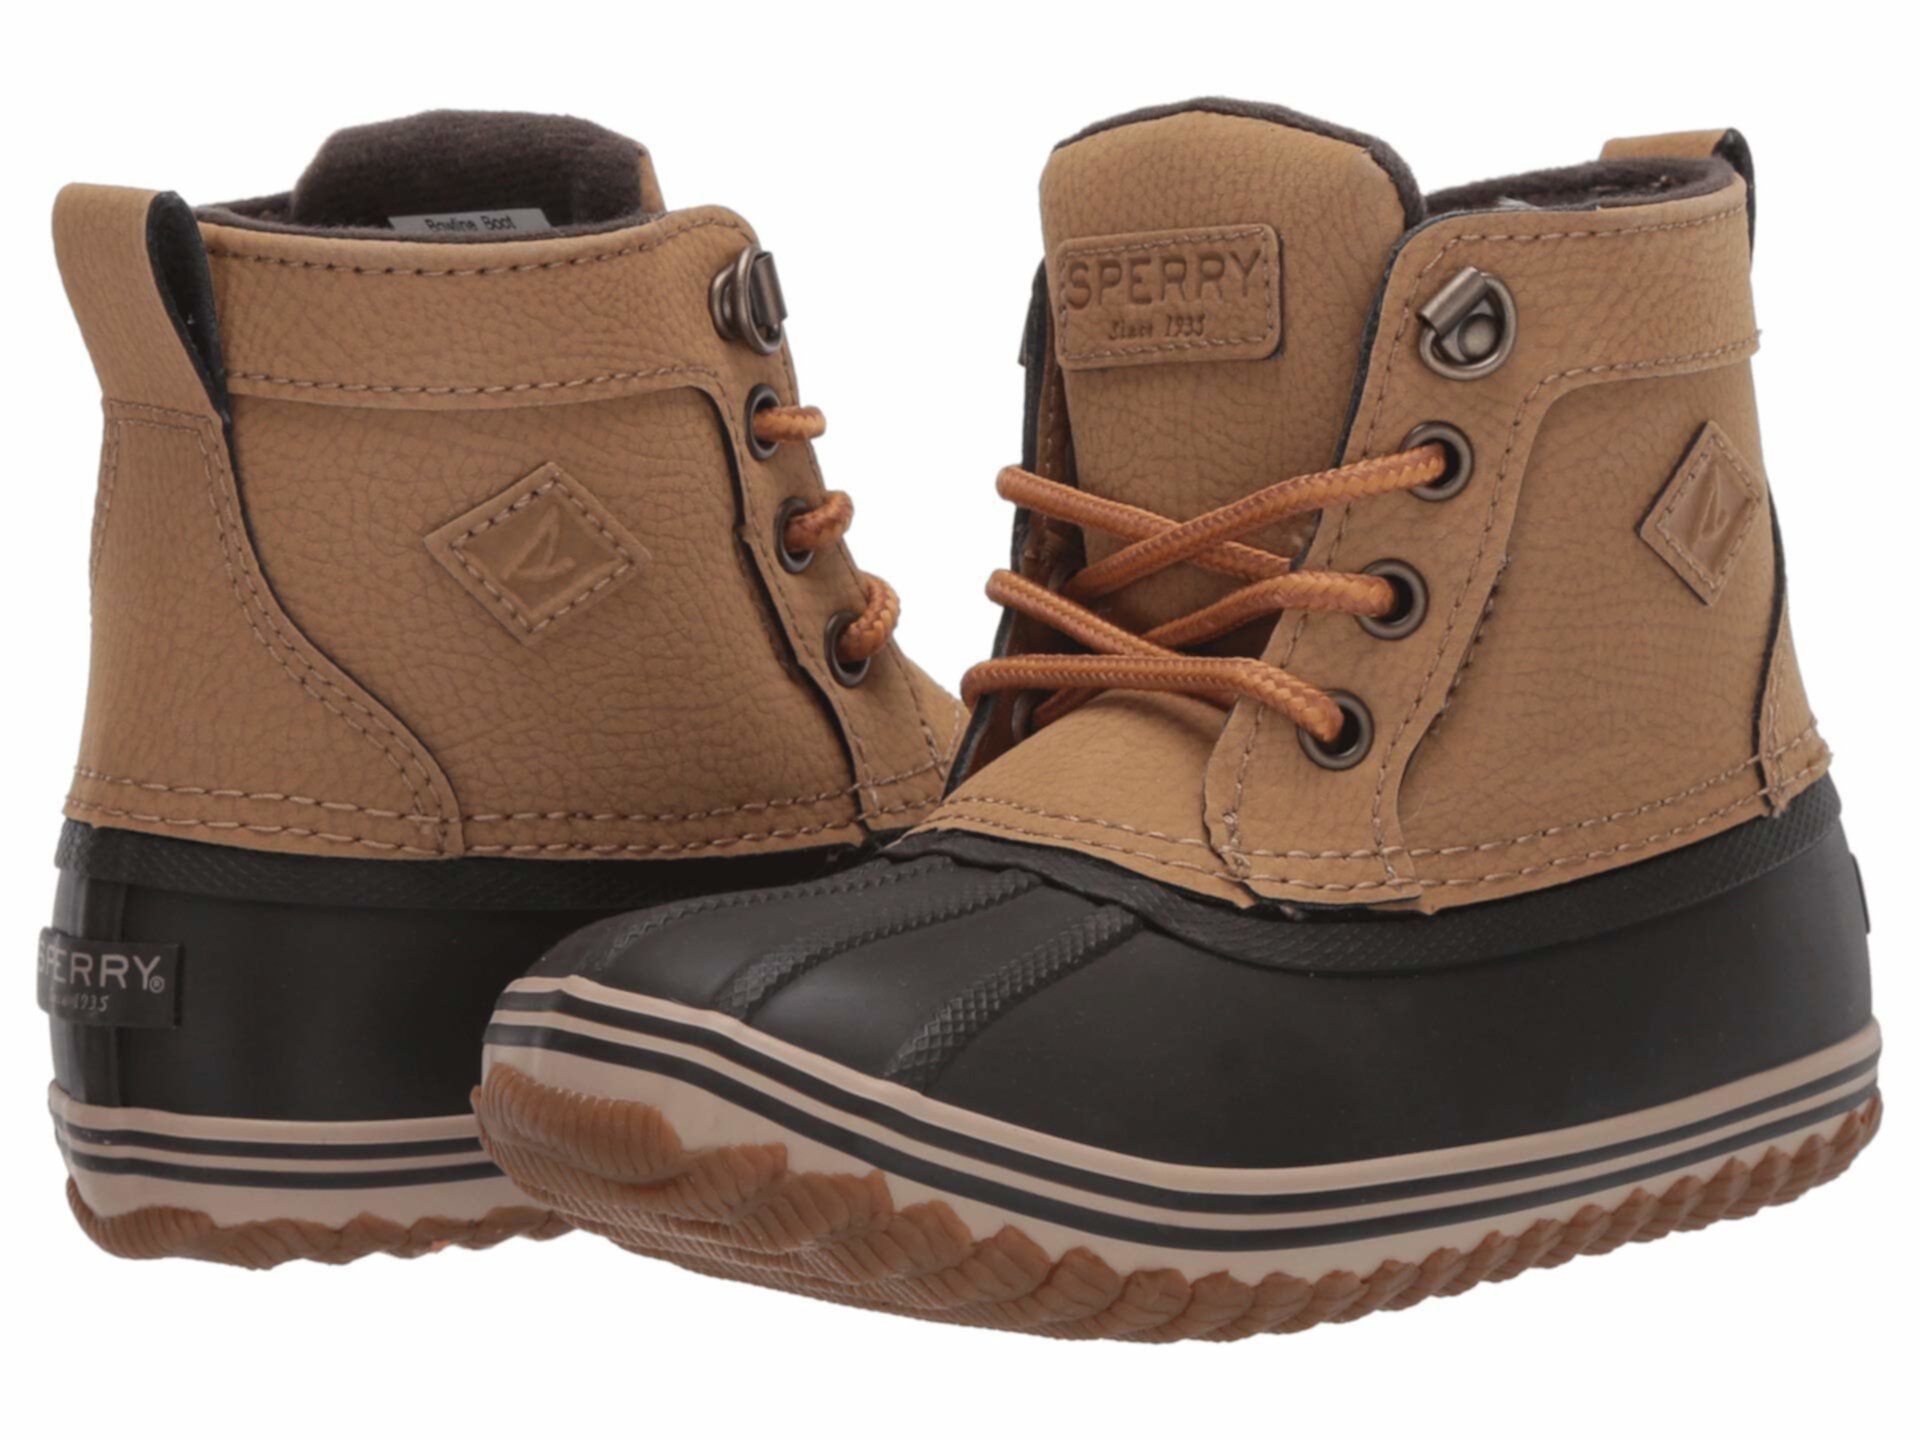 Bowline Boot (Малыш / Малыш) Sperry Kids